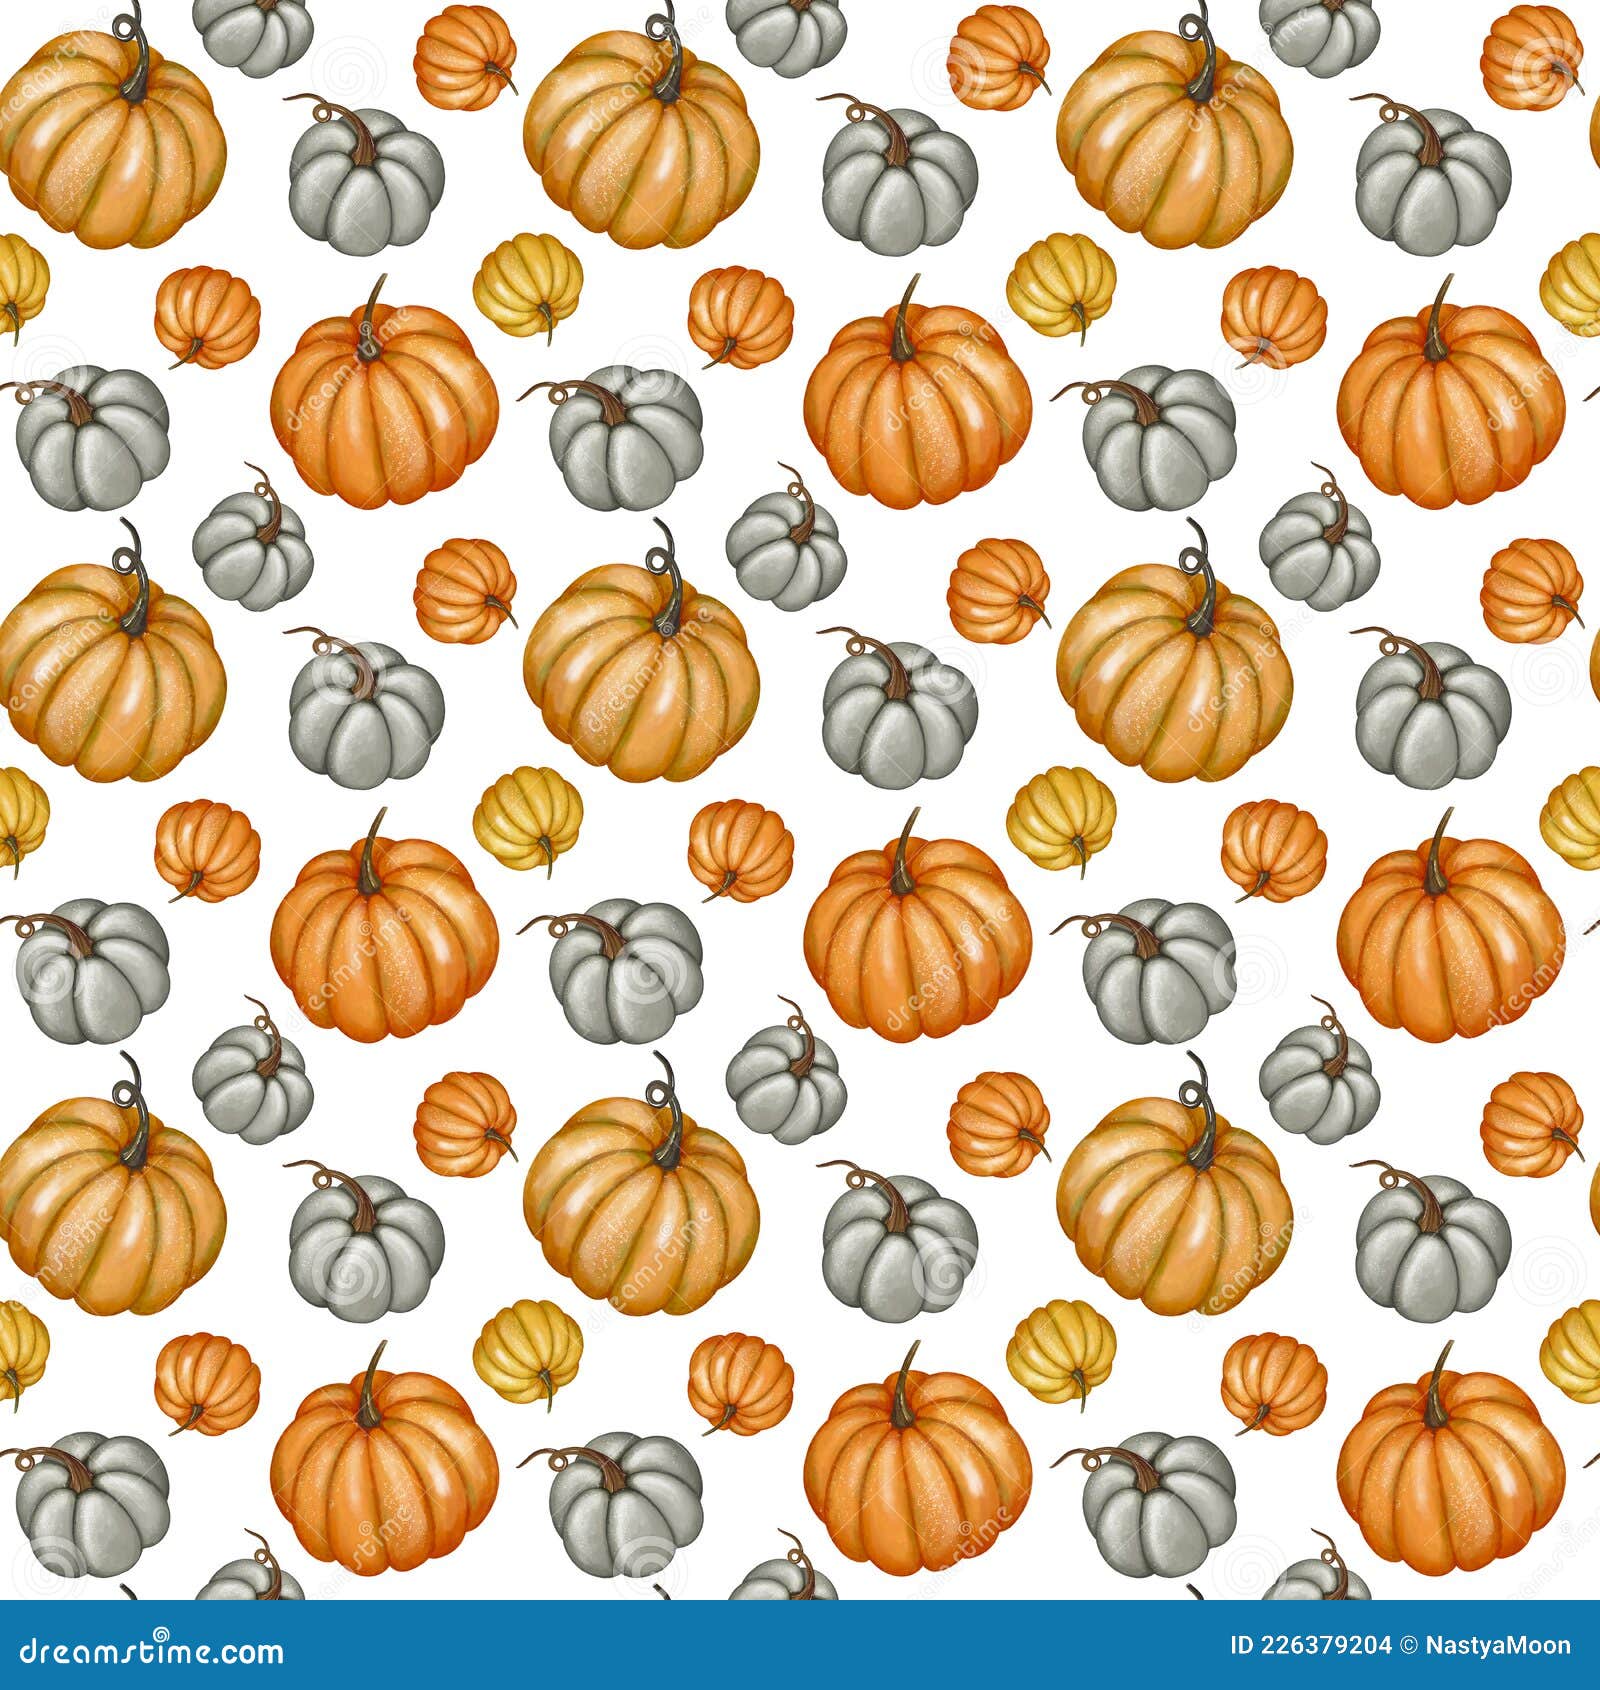 Fall Pumpkin Wallpapers Free download  PixelsTalkNet